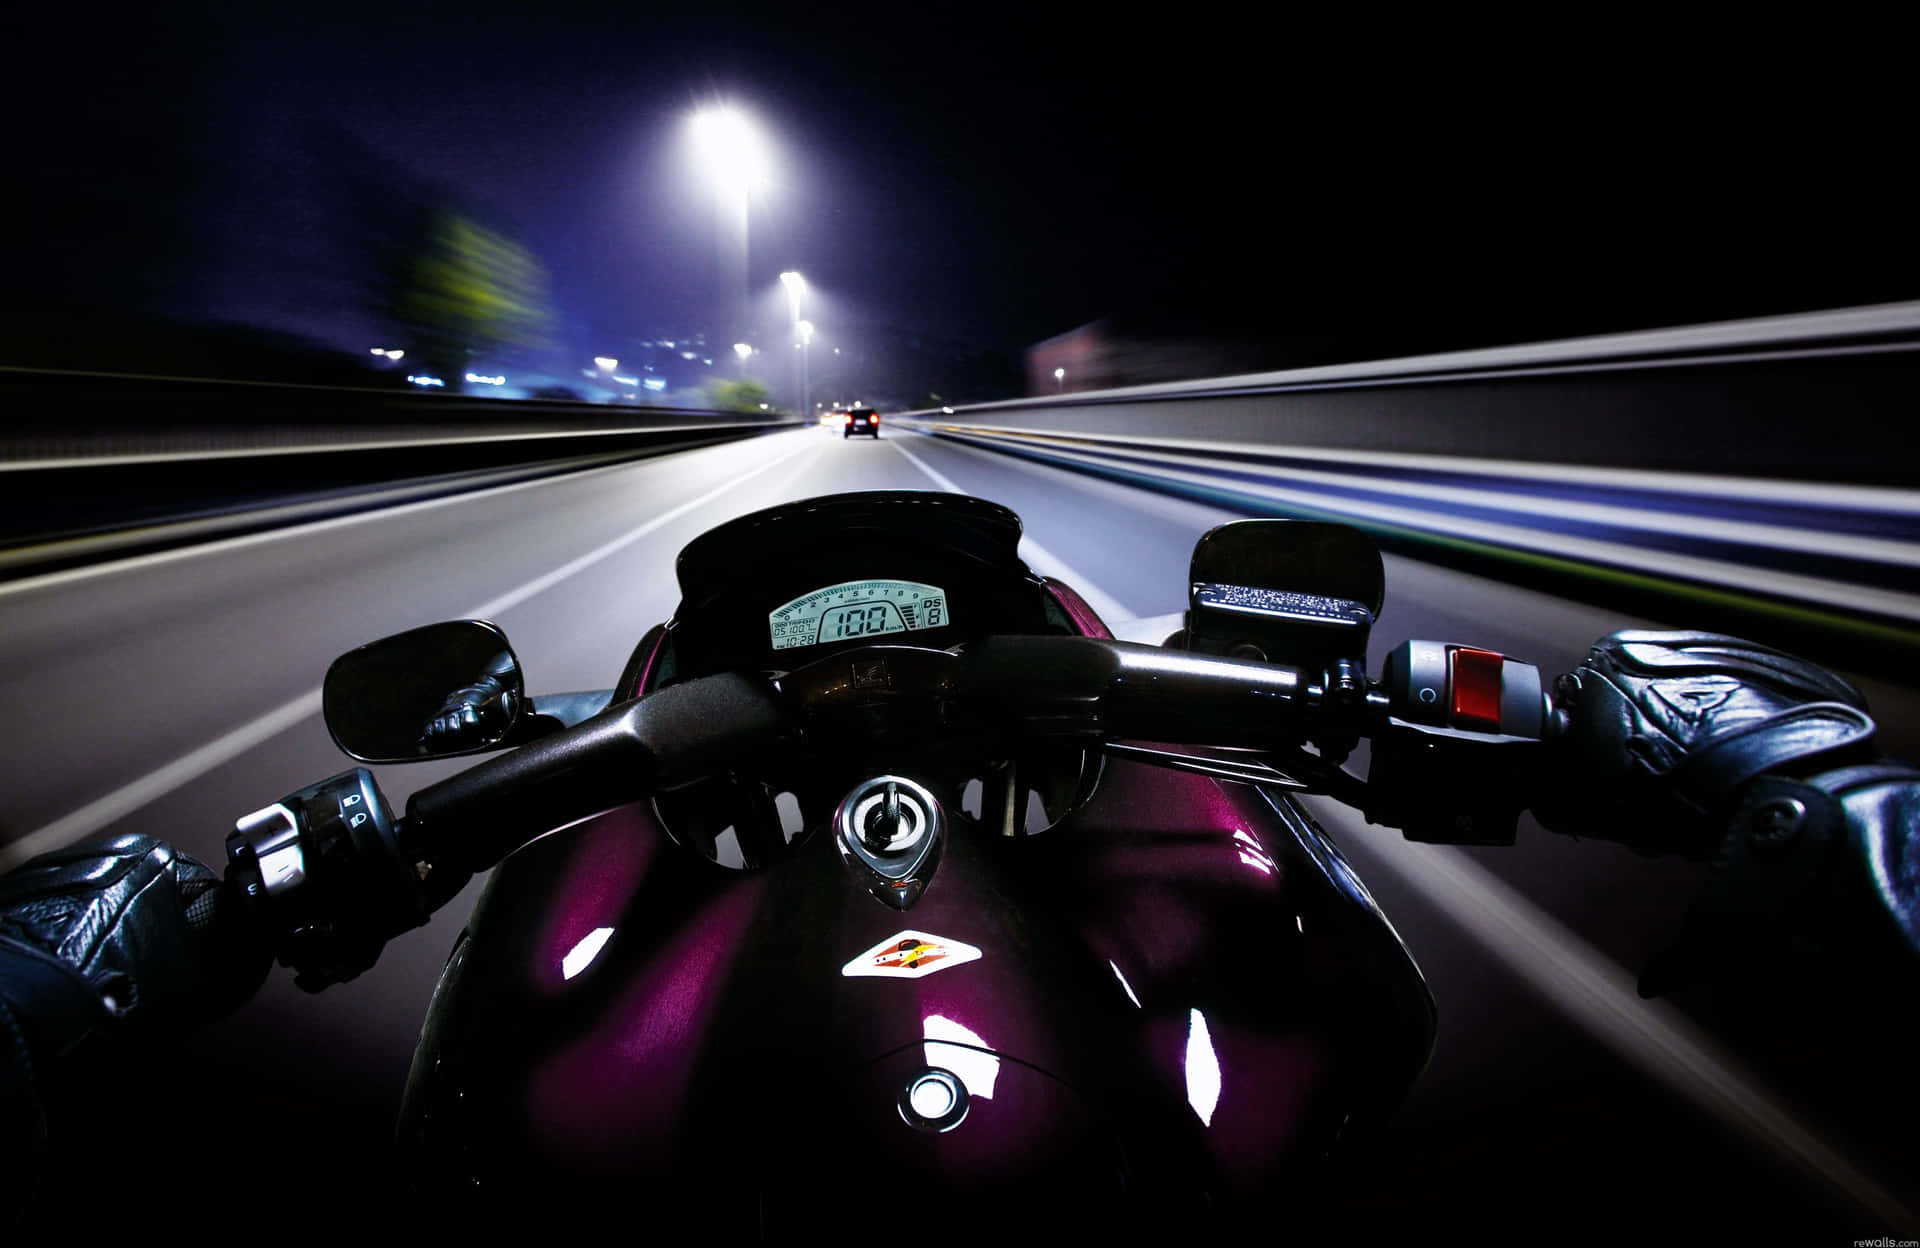 Motorcycle Speeding Night Ride Background